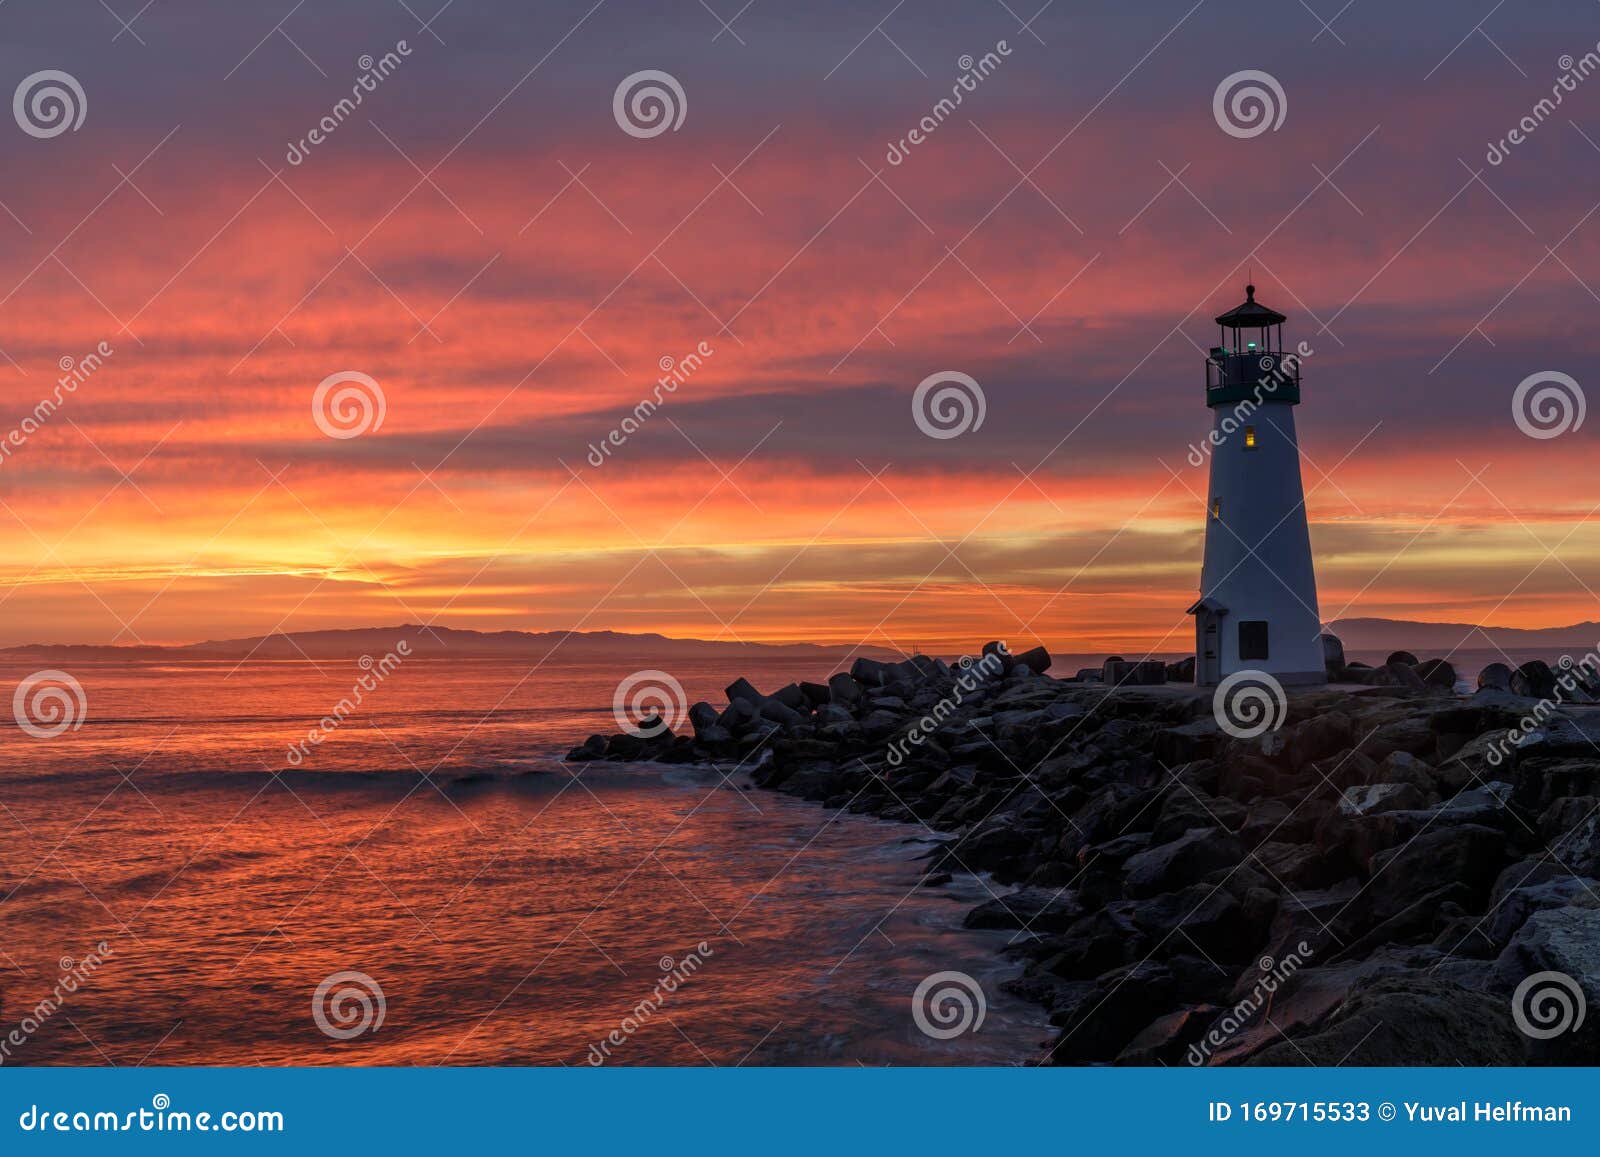 walton lighthouse at dawn